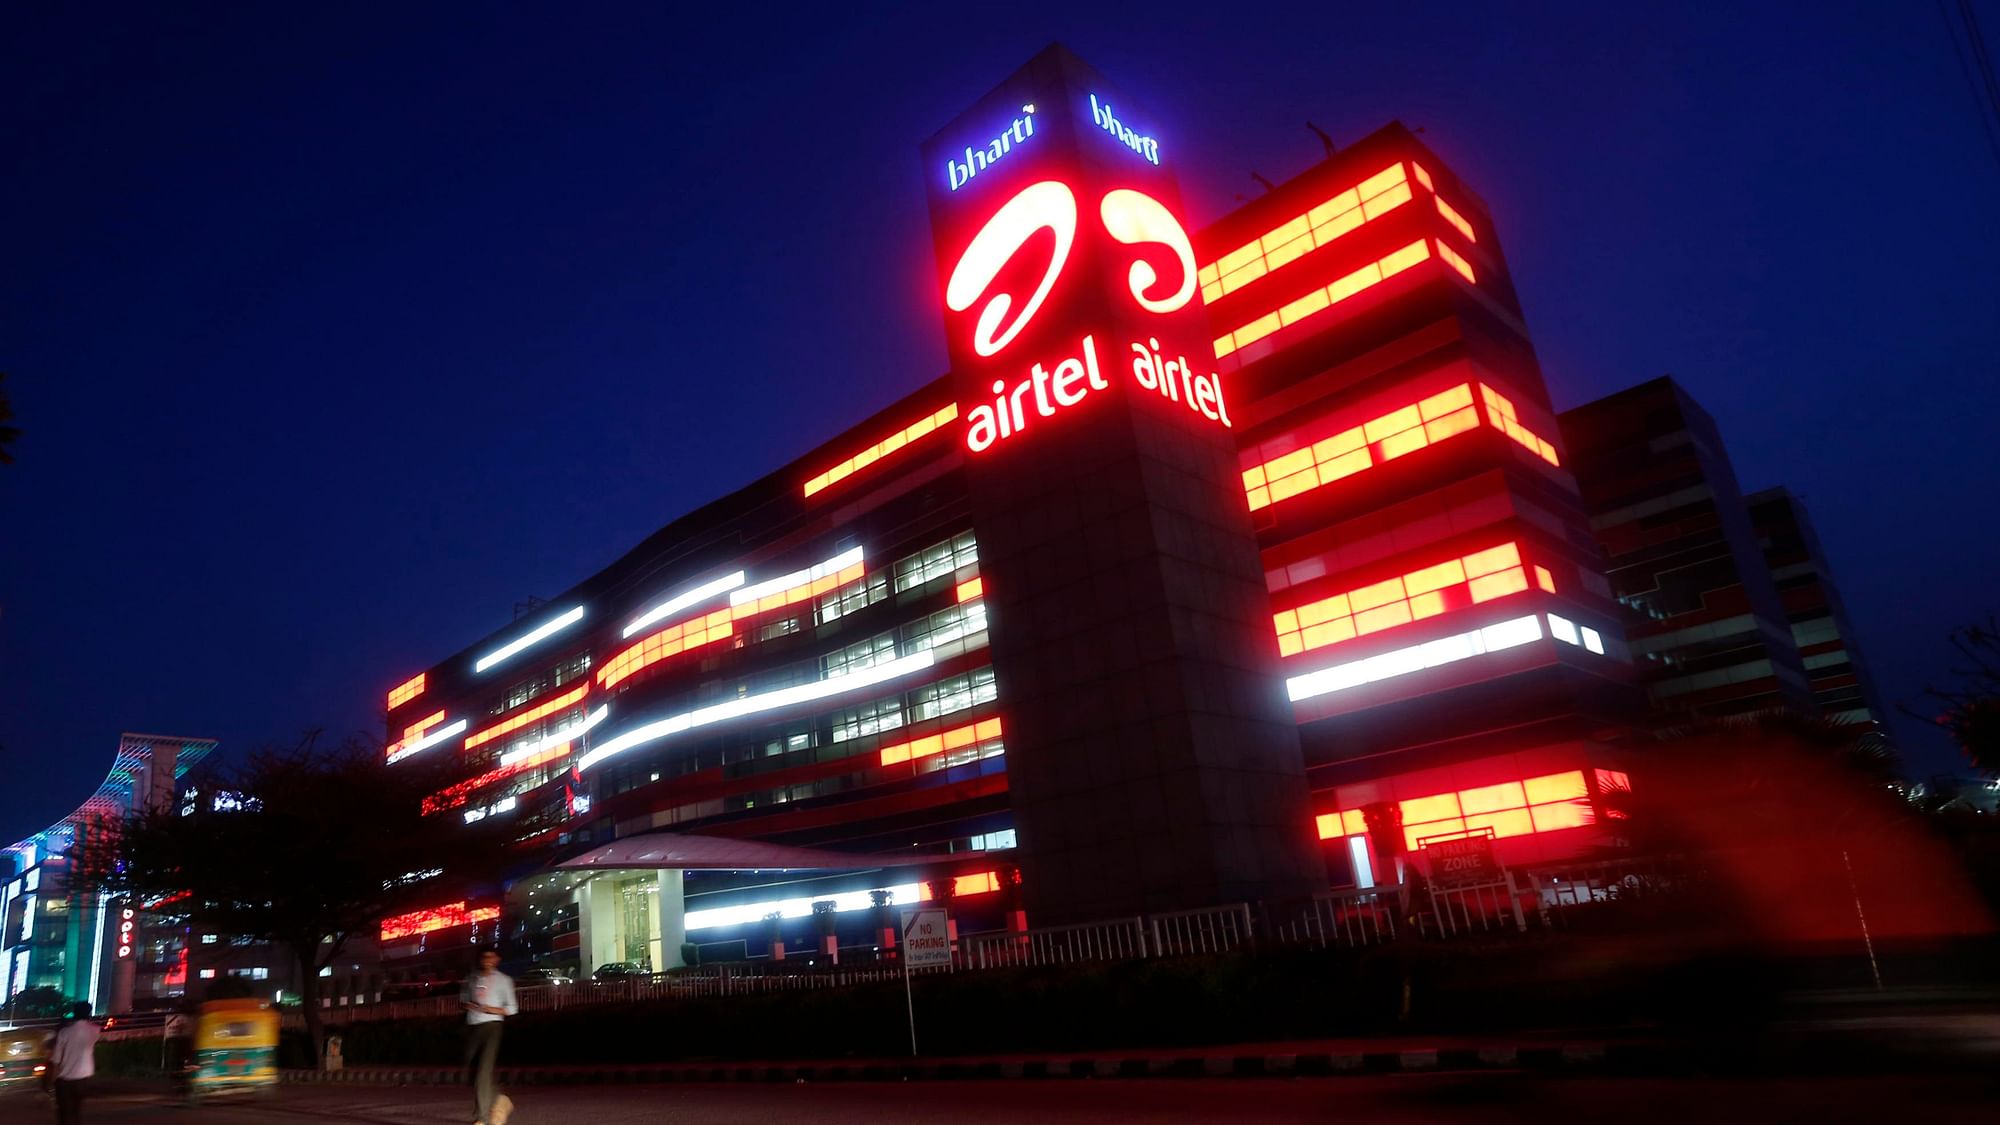 The Bharti Airtel office building in Gurgaon.